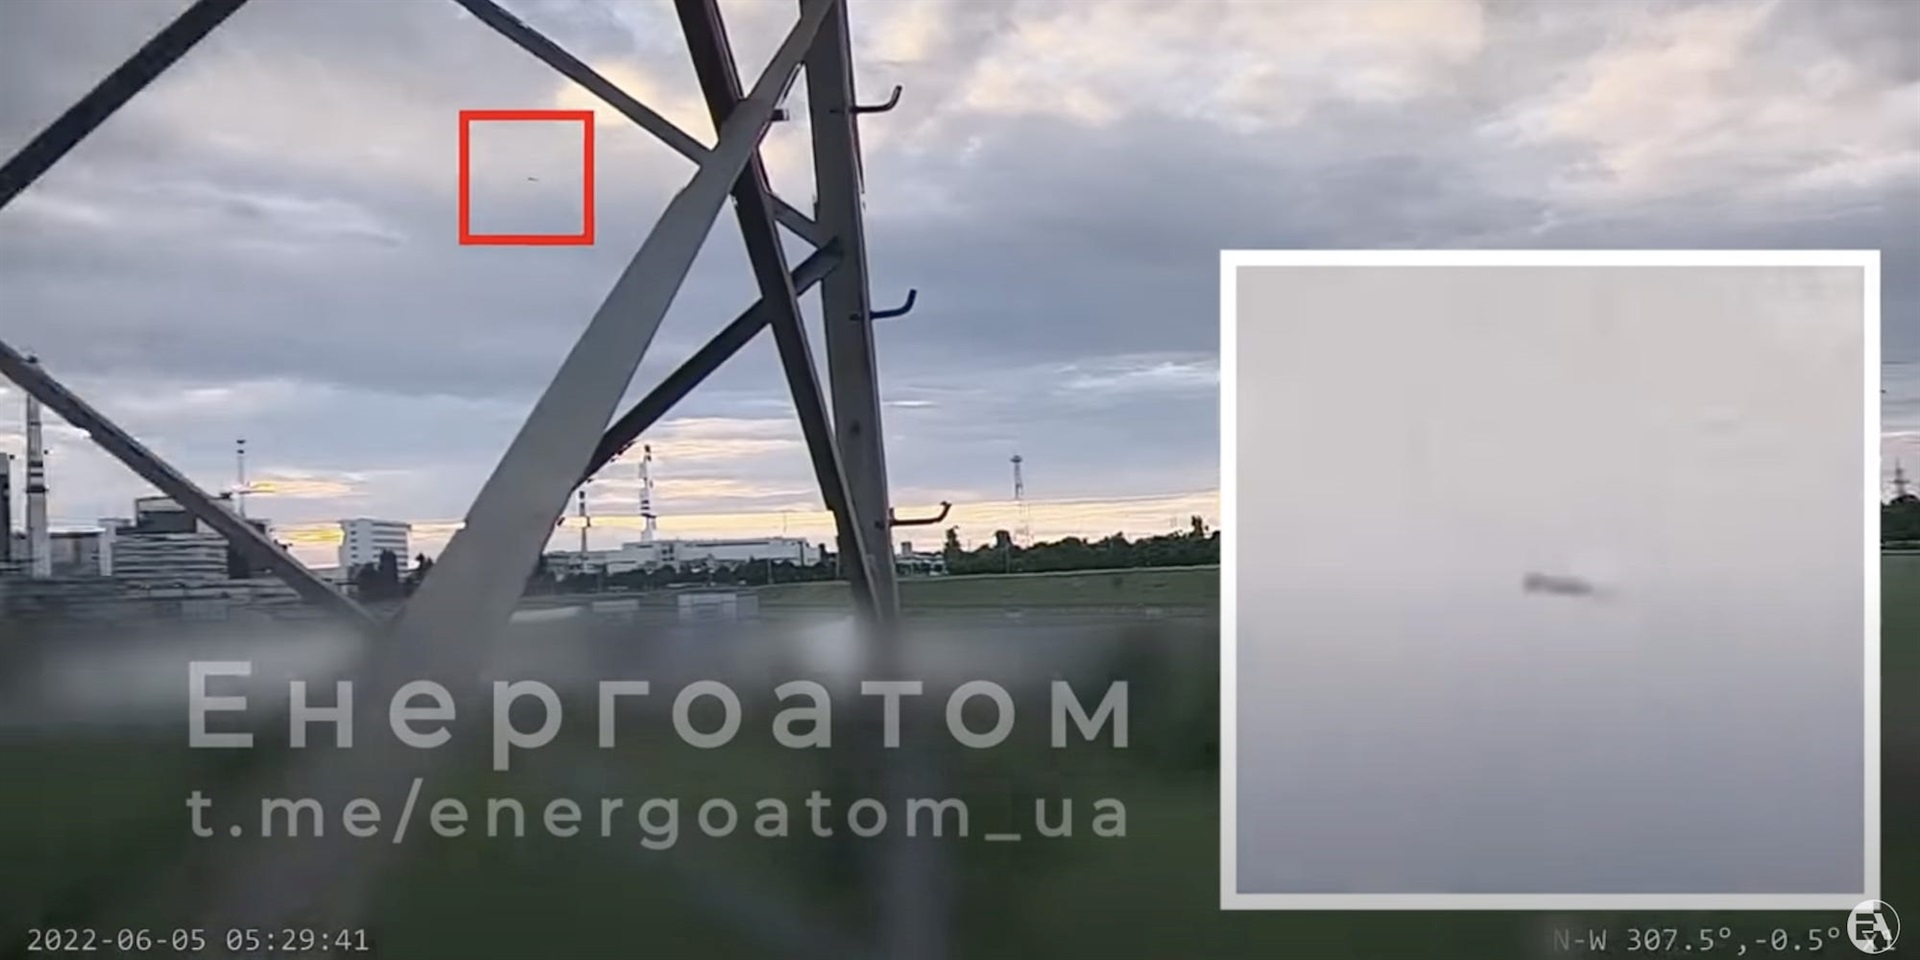 Video menunjukkan rudal jelajah Rusia terbang melewati pembangkit listrik tenaga nuklir Ukraina menuju Kyiv, kata Ukraina